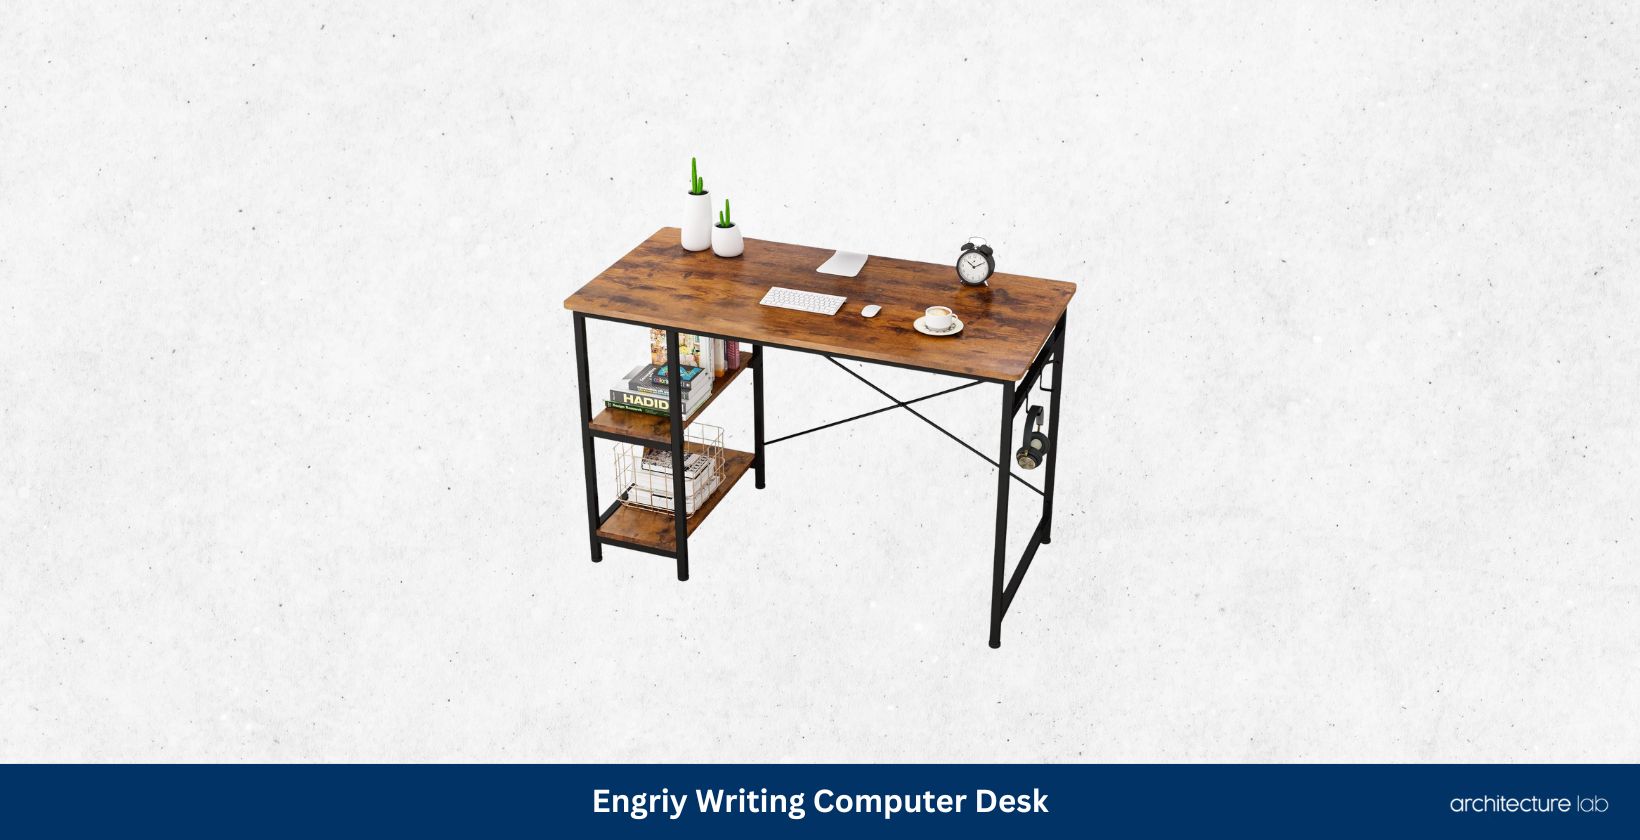 Engriy writing computer desk